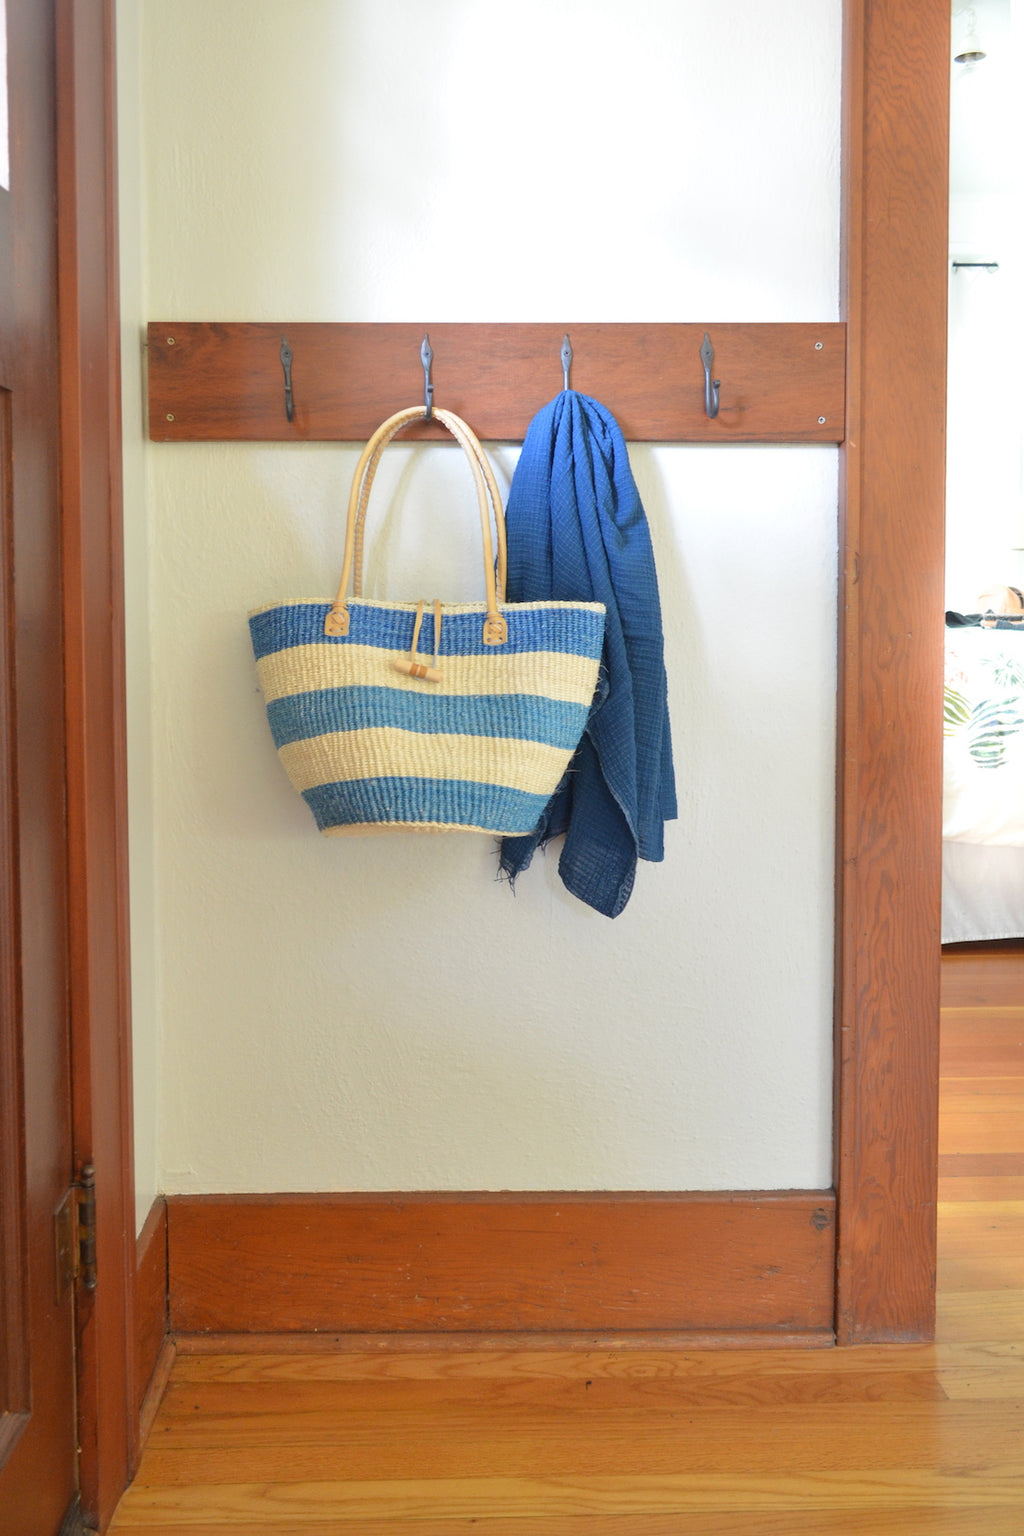 Classic Blue Striped Sisal Handbag with Leather Handles